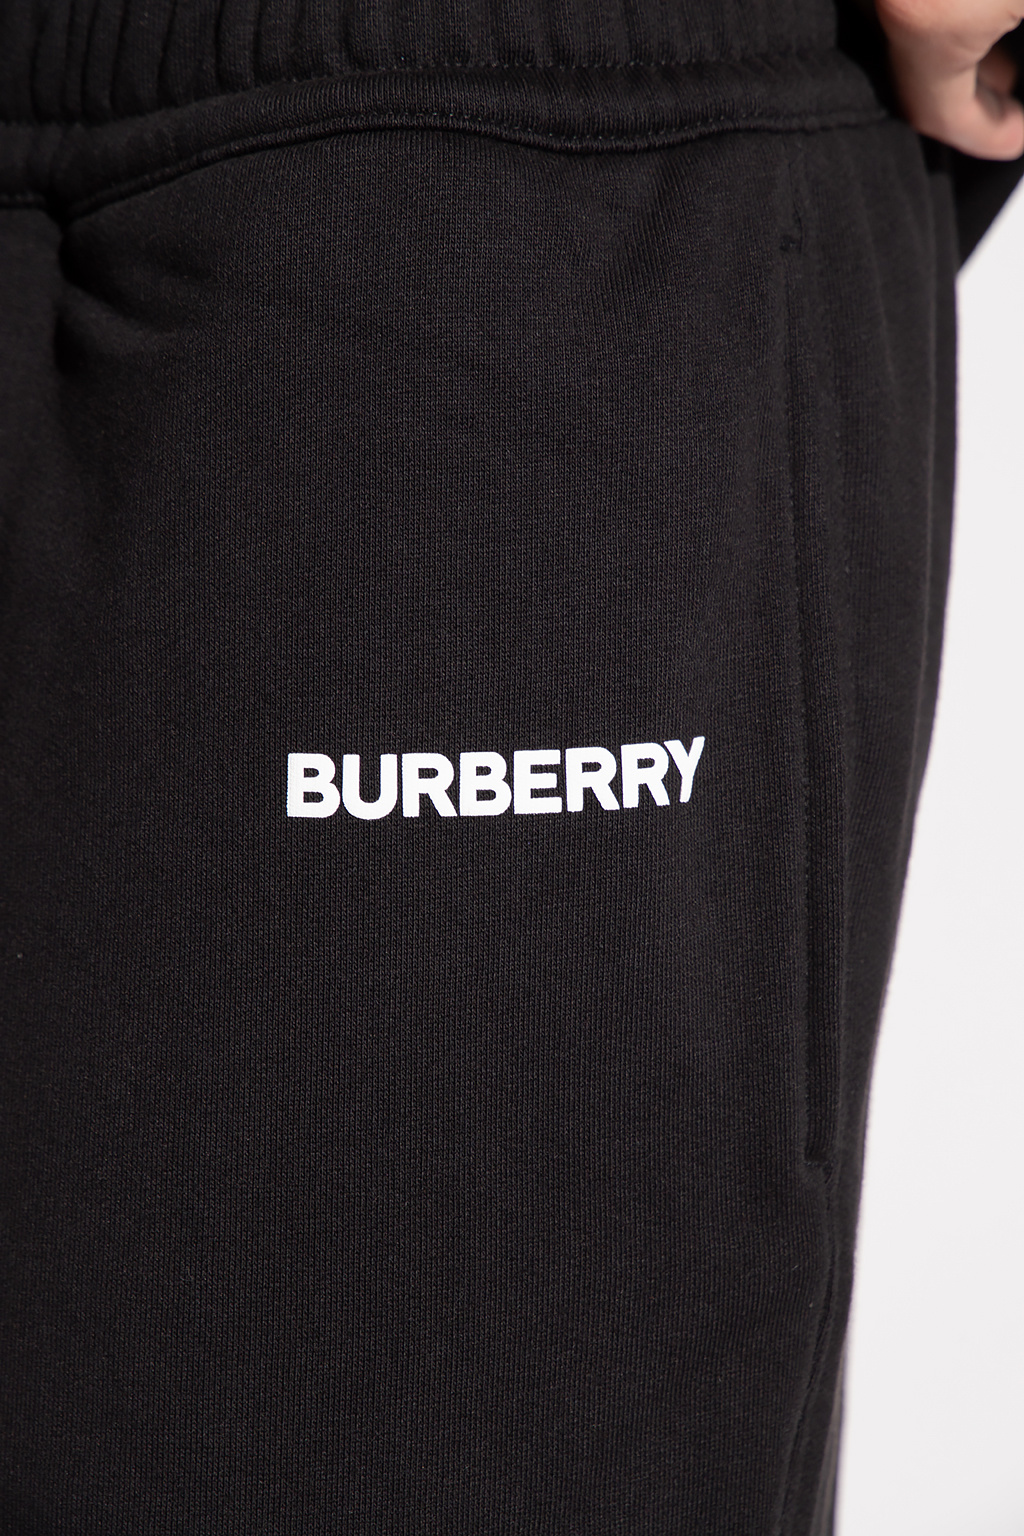 Burberry 'Addison' sweatpants | Clothing | Vitkac